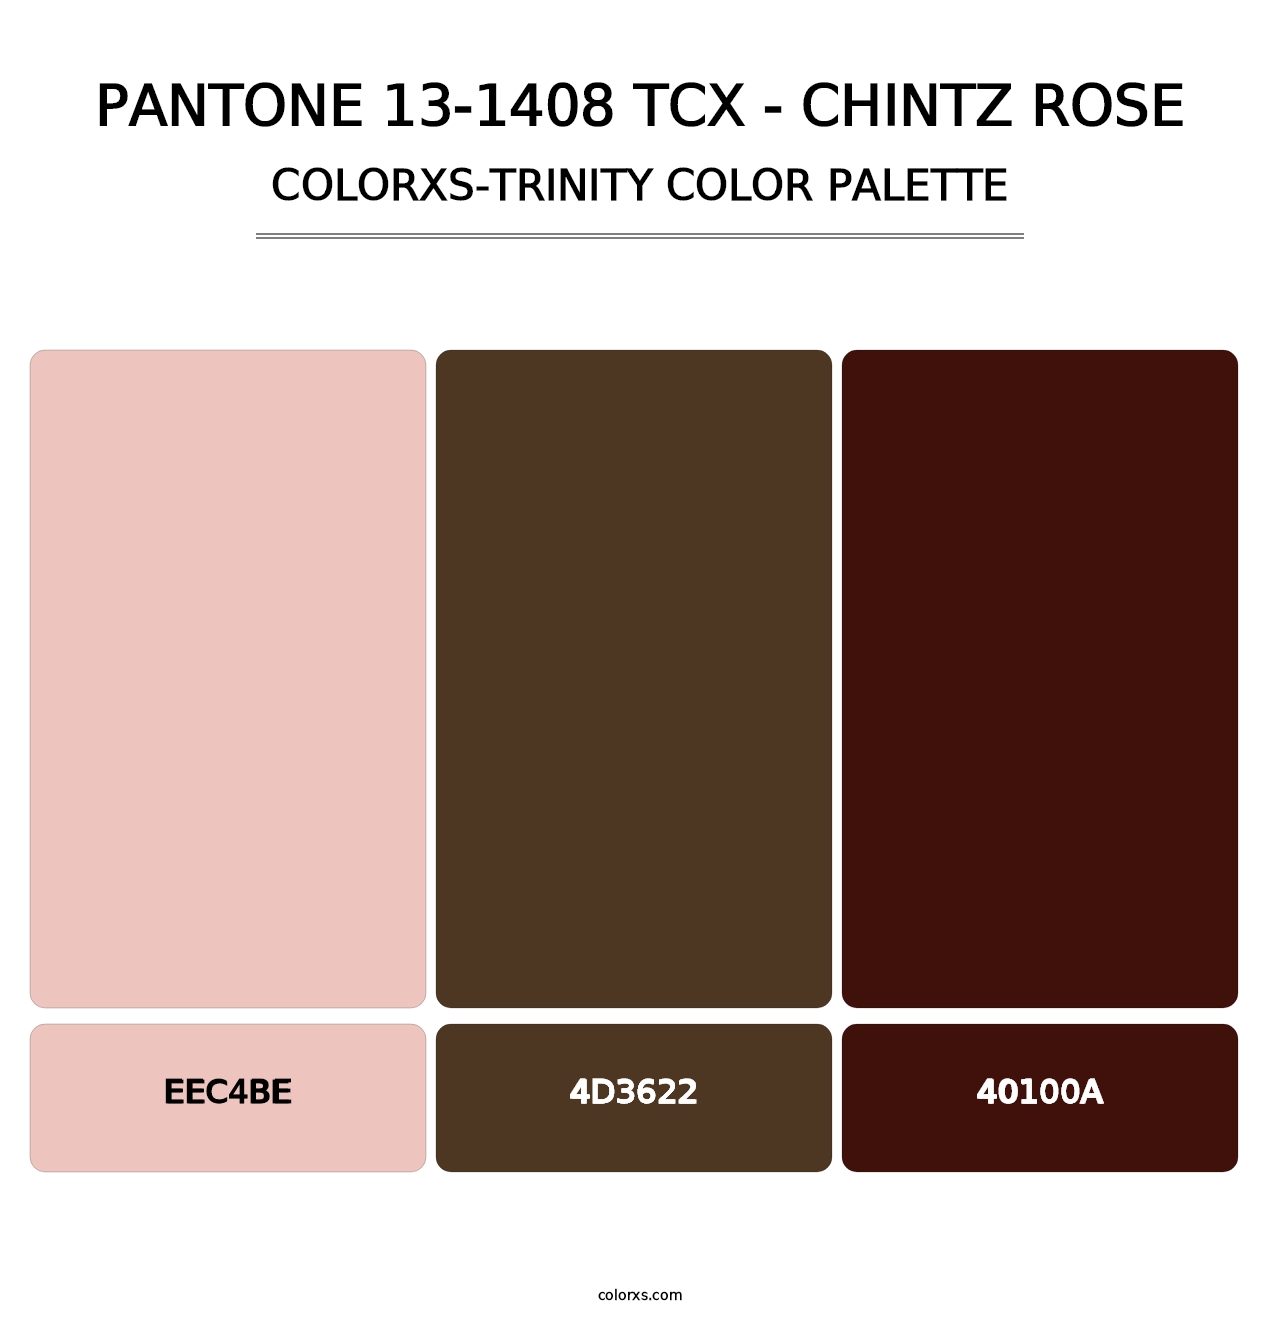 PANTONE 13-1408 TCX - Chintz Rose - Colorxs Trinity Palette